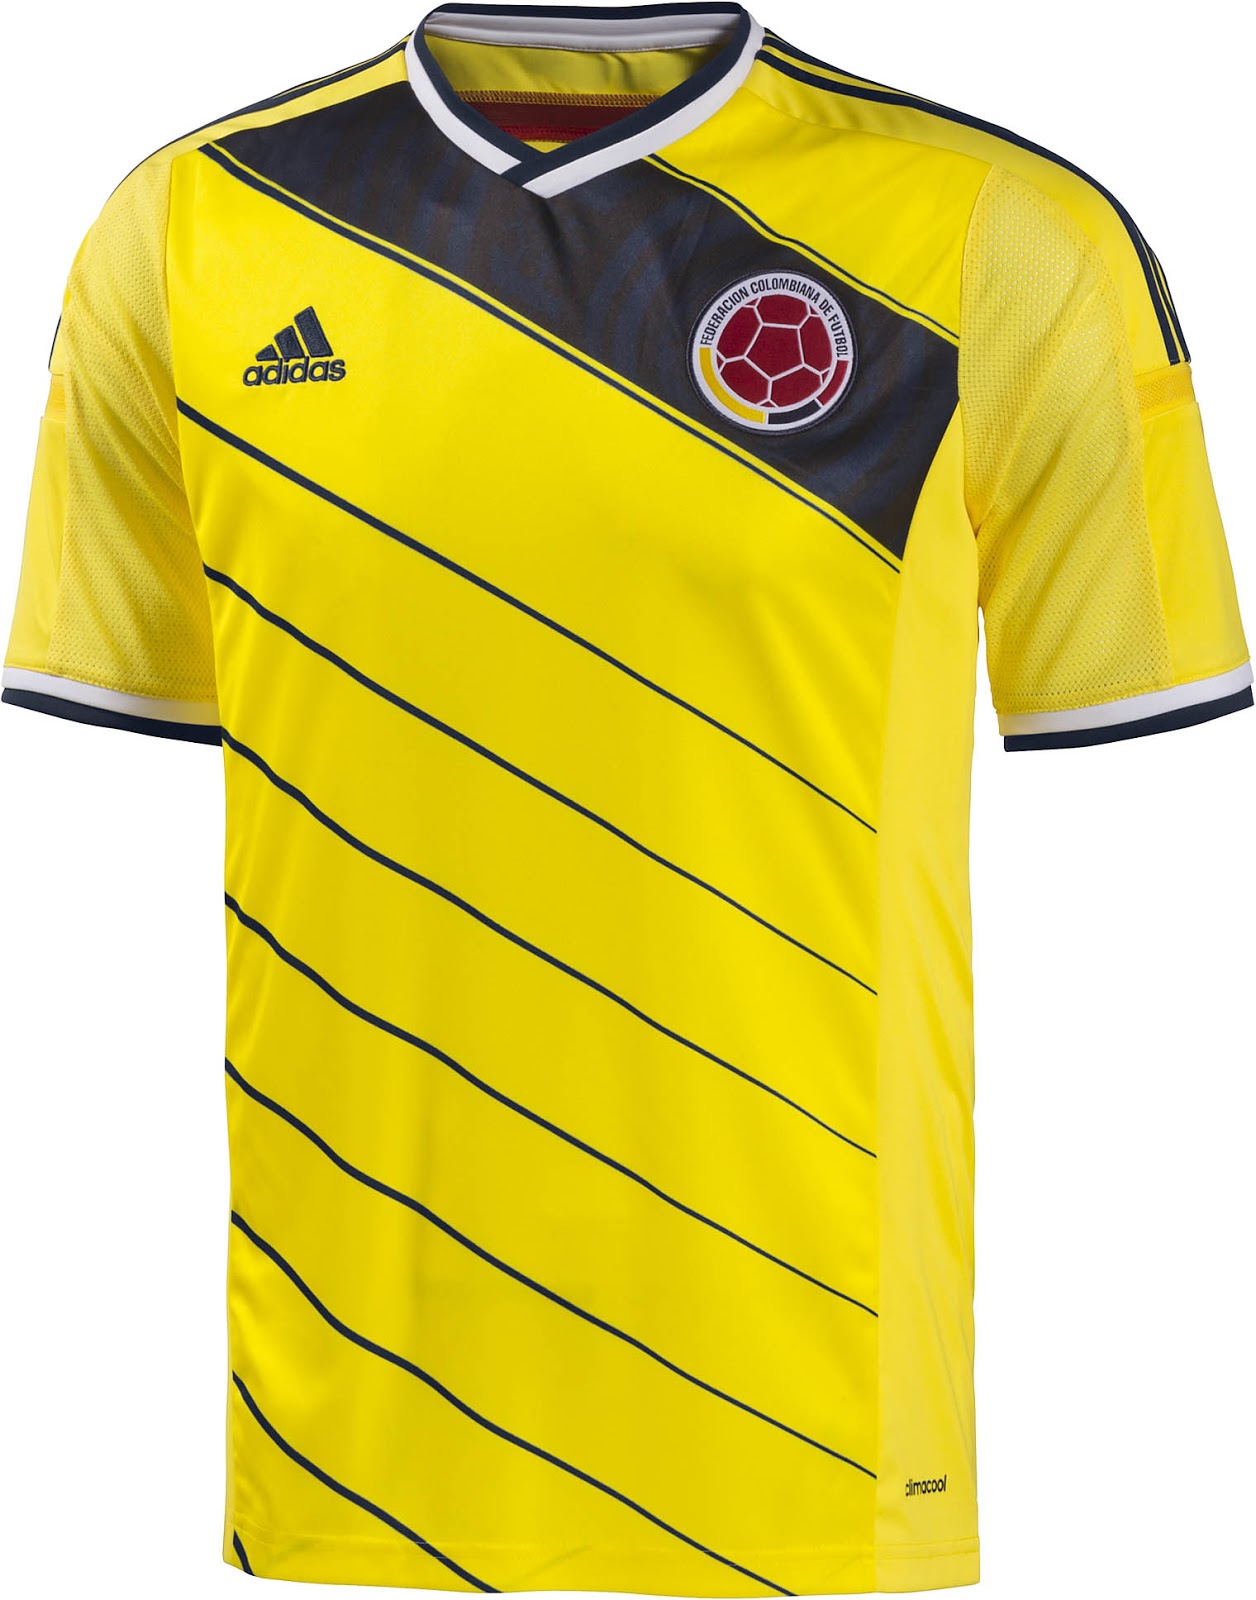 Ministerie verlichten Maestro Colombia 2014 World Cup Kits Released - Footy Headlines